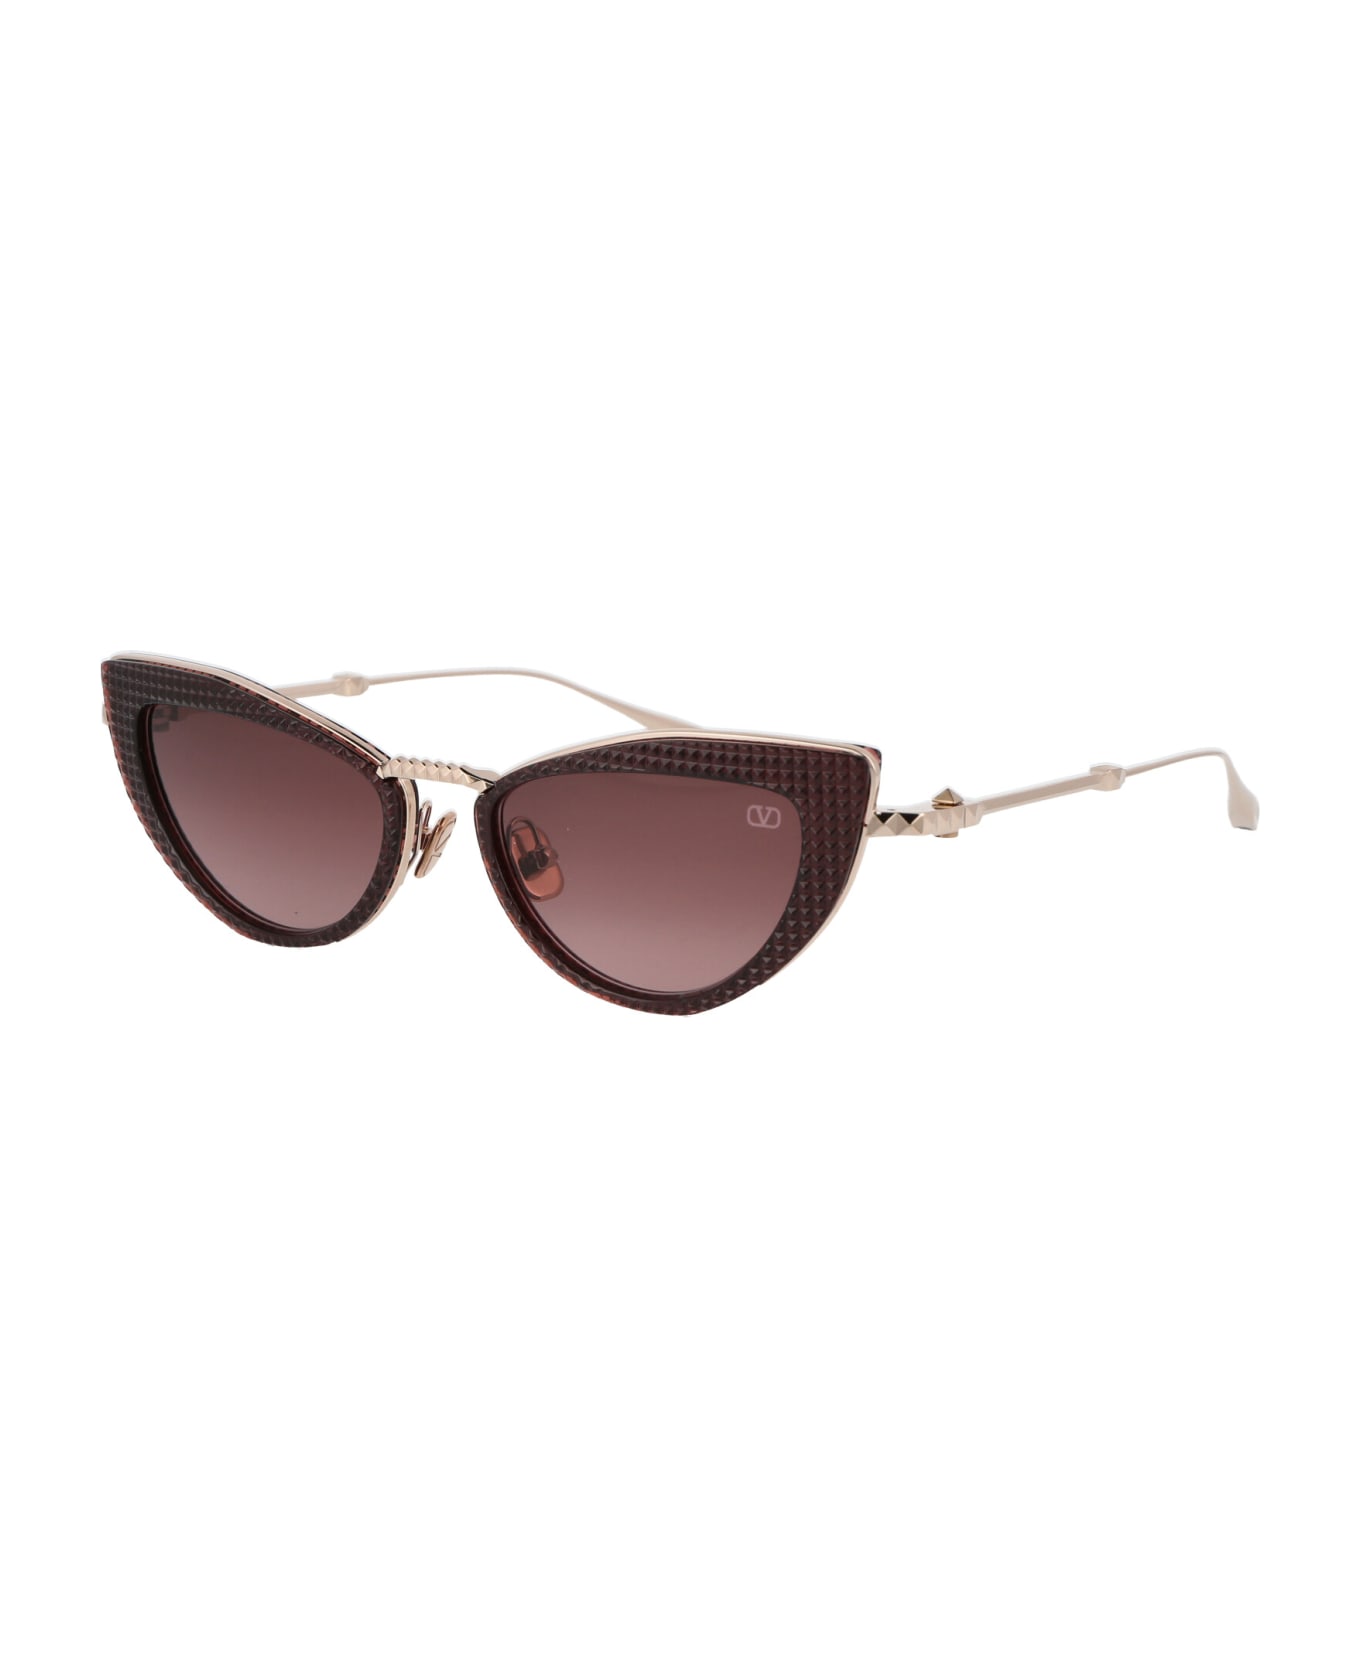 Valentino Eyewear Viii Sunglasses - WHITE GOLD CRYSTAL BORDEAUX W/ DARK ROSE TO LIGHT ROSE GRADIENT